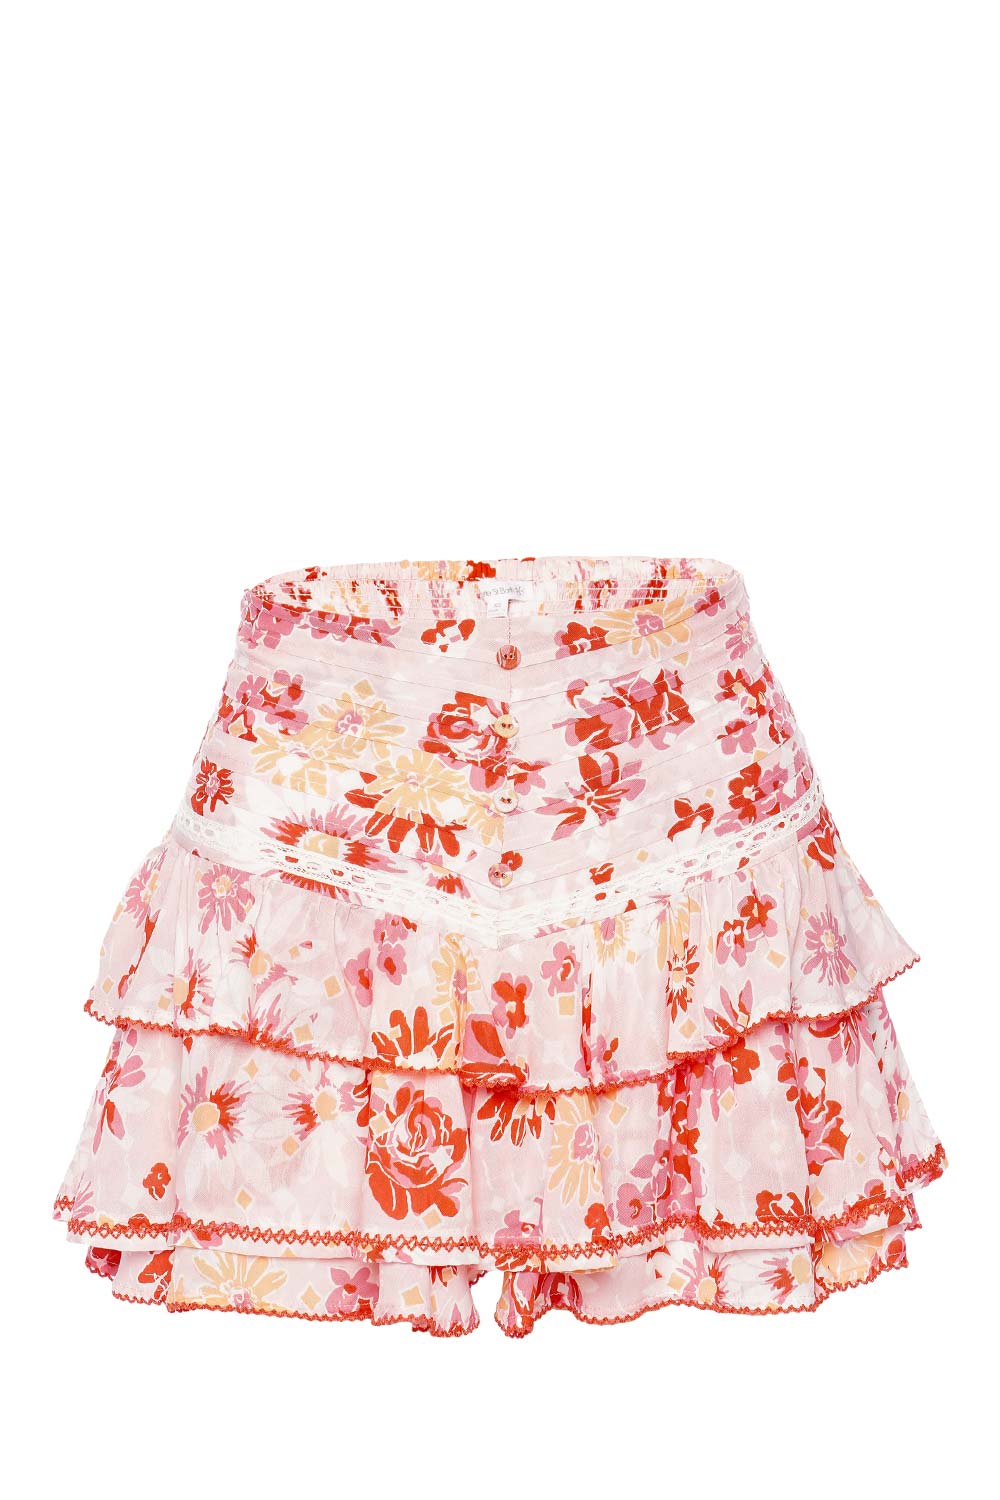 Poupette St Barth Alizee Pink 90's Mini Skirt